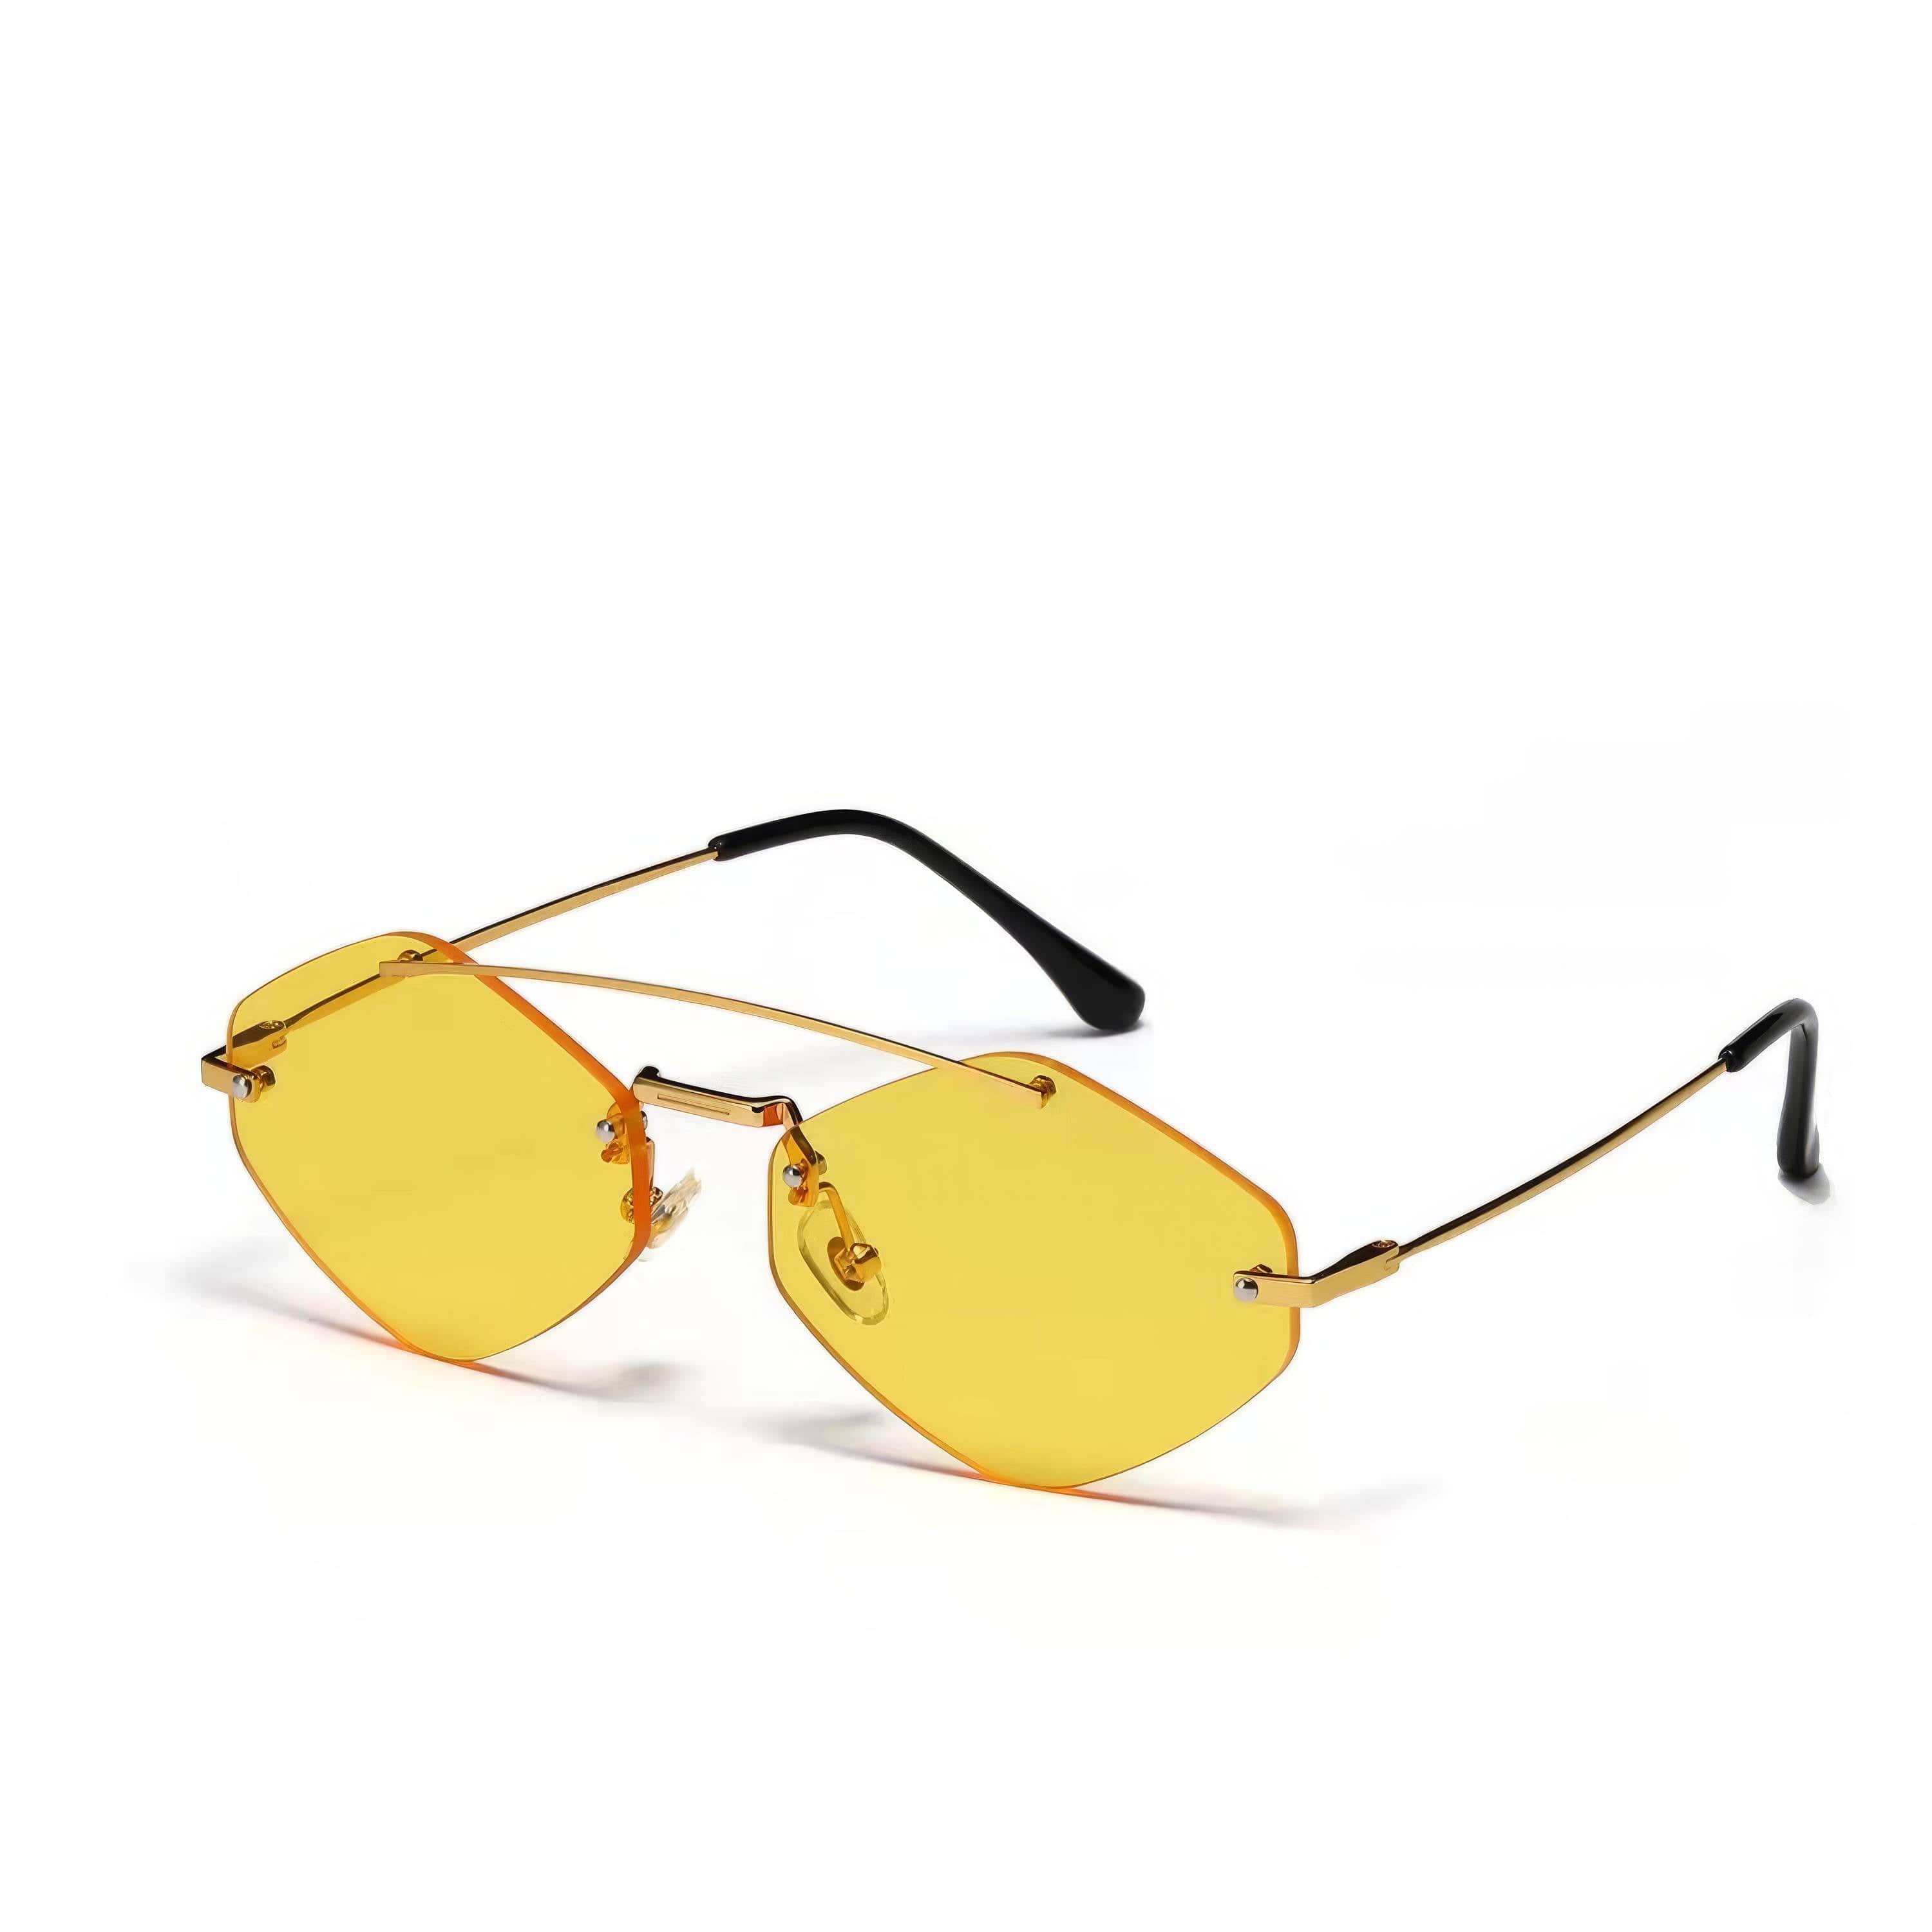 Retro Unique Double Bridge Sunglasses Yellow/Golden Rod / Resin